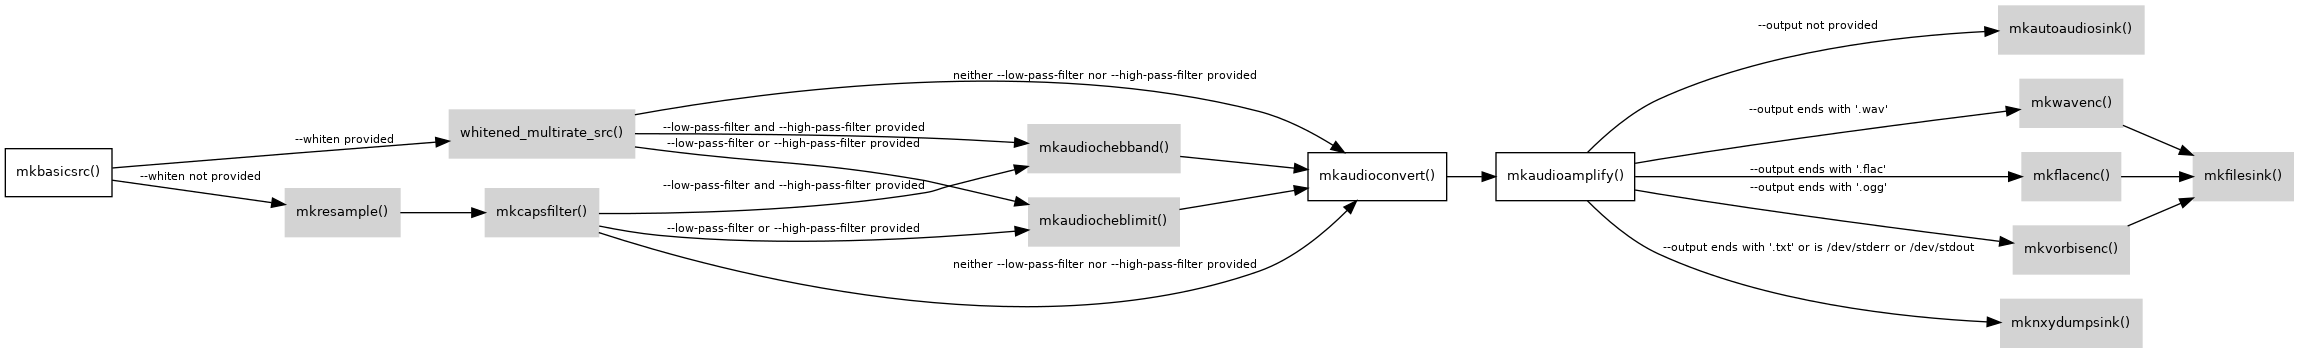 digraph G {
      // graph properties

      rankdir=LR;
      compound=true;
      node [shape=record fontsize=10 fontname="Verdana"];
      edge [fontsize=8 fontname="Verdana"];

      // nodes

      "mkbasicsrc()" [URL="\ref datasource.mkbasicsrc()"];
      "whitened_multirate_src()" [label="whitened_multirate_src()", URL="\ref multirate_datasource.mkwhitened_multirate_src()", style=filled, color=lightgrey];
      "mkresample()" [URL="\ref pipeparts.mkresample()", style=filled, color=lightgrey];
      "mkcapsfilter()" [URL="\ref pipeparts.mkcapsfilter()", style=filled, color=lightgrey];
      "mkaudiochebband()" [URL="\ref pipeparts.mkaudiochebband()", style=filled, color=lightgrey];
      "mkaudiocheblimit()" [URL="\ref pipeparts.mkaudiocheblimit()", style=filled, color=lightgrey];
      "mkaudioconvert()" [URL="\ref pipeparts.mkaudioconvert()"];
      "mkaudioamplify()" [URL="\ref pipeparts.mkaudioamplify()"];
      "mkautoaudiosink()" [URL="\ref pipeparts.mkautoaudiosink()", style=filled, color=lightgrey];
      "mkwavenc()" [URL="\ref pipeparts.mkwavenc()", style=filled, color=lightgrey];
      "mkflacenc()" [URL="\ref pipeparts.mkflacenc()", style=filled, color=lightgrey];
      "mkvorbisenc()" [URL="\ref pipeparts.mkvorbisenc()", style=filled, color=lightgrey];
      "mkfilesink()" [URL="\ref pipeparts.mkfilesink()", style=filled, color=lightgrey];
      "mknxydumpsink()" [URL="\ref pipeparts.mknxydumpsink()", style=filled, color=lightgrey];

      // connections

      "mkbasicsrc()" -> "mkresample()" [label=" --whiten not provided"];
      "mkresample()" -> "mkcapsfilter()";
      "mkcapsfilter()" -> "mkaudioconvert()" [label=" neither --low-pass-filter nor --high-pass-filter provided"];
      "mkcapsfilter()" -> "mkaudiochebband()" [label=" --low-pass-filter and --high-pass-filter provided"];
      "mkcapsfilter()" -> "mkaudiocheblimit()" [label=" --low-pass-filter or --high-pass-filter provided"];

      "mkbasicsrc()" -> "whitened_multirate_src()" [label=" --whiten provided"];
      "whitened_multirate_src()" -> "mkaudioconvert()" [label=" neither --low-pass-filter nor --high-pass-filter provided"];
      "whitened_multirate_src()" -> "mkaudiochebband()" [label=" --low-pass-filter and --high-pass-filter provided"];
      "whitened_multirate_src()" -> "mkaudiocheblimit()" [label=" --low-pass-filter or --high-pass-filter provided"];

      "mkaudiochebband()" -> "mkaudioconvert()";
      "mkaudiocheblimit()" -> "mkaudioconvert()";

      "mkaudioconvert()" -> "mkaudioamplify()";

      "mkaudioamplify()" -> "mkautoaudiosink()" [label=" --output not provided"];
      "mkaudioamplify()" -> "mkwavenc()" [label=" --output ends with '.wav'"];
      "mkaudioamplify()" -> "mkflacenc()" [label=" --output ends with '.flac'"];
      "mkaudioamplify()" -> "mkvorbisenc()" [label=" --output ends with '.ogg'"];
      "mkaudioamplify()" -> "mknxydumpsink()" [label=" --output ends with '.txt' or is /dev/stderr or /dev/stdout"];
      "mkwavenc()" -> "mkfilesink()";
      "mkvorbisenc()" -> "mkfilesink()";
      "mkflacenc()" -> "mkfilesink()";
}